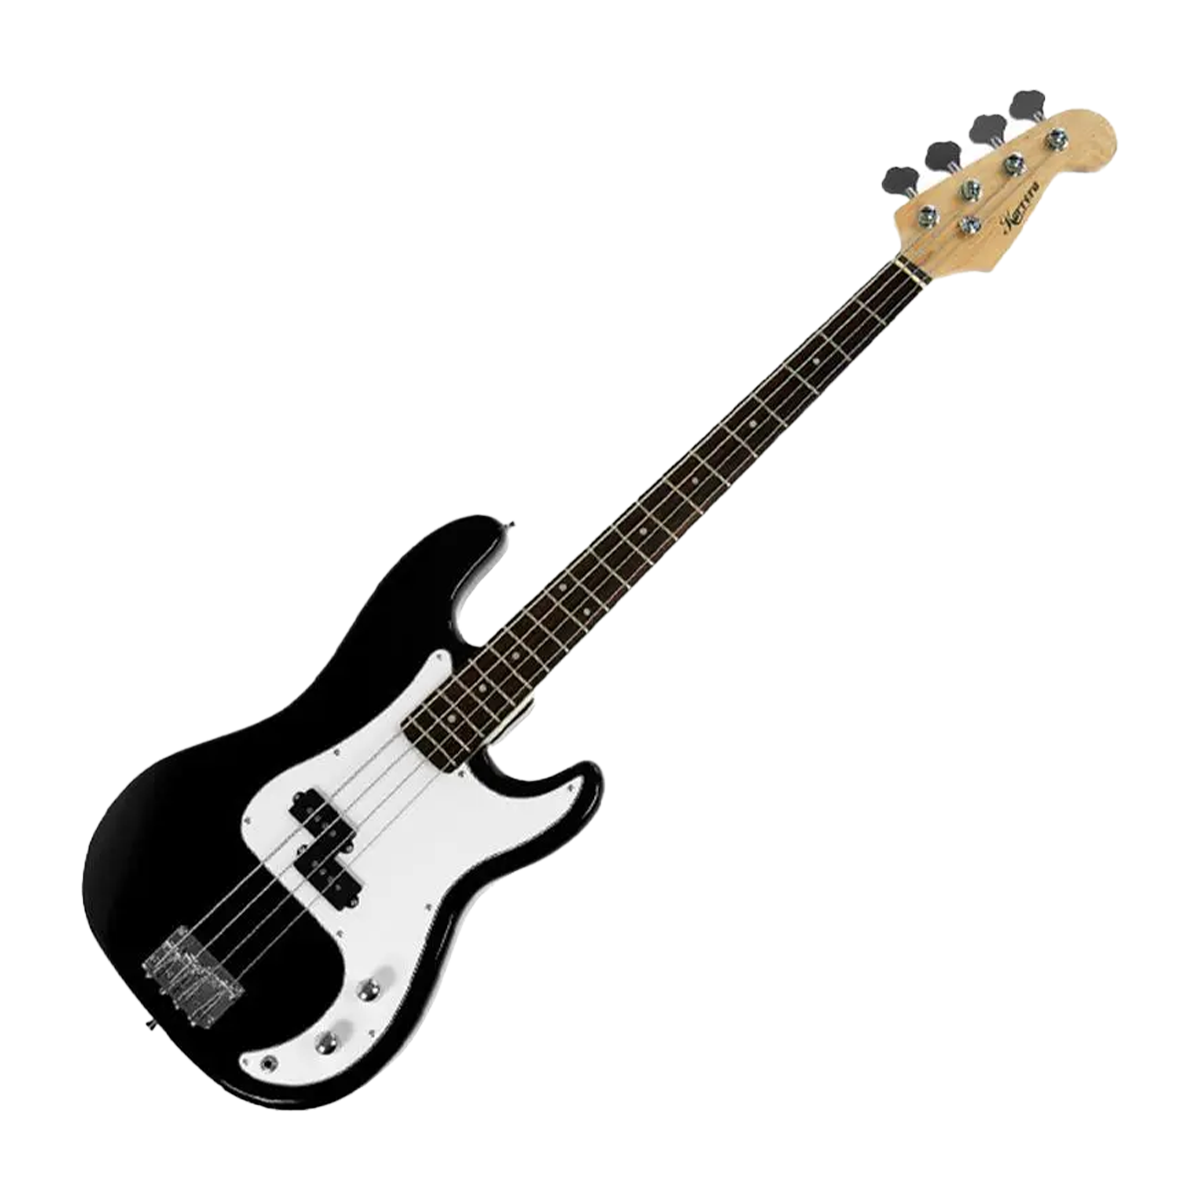 Karrera Electric Bass Guitar - Black 2